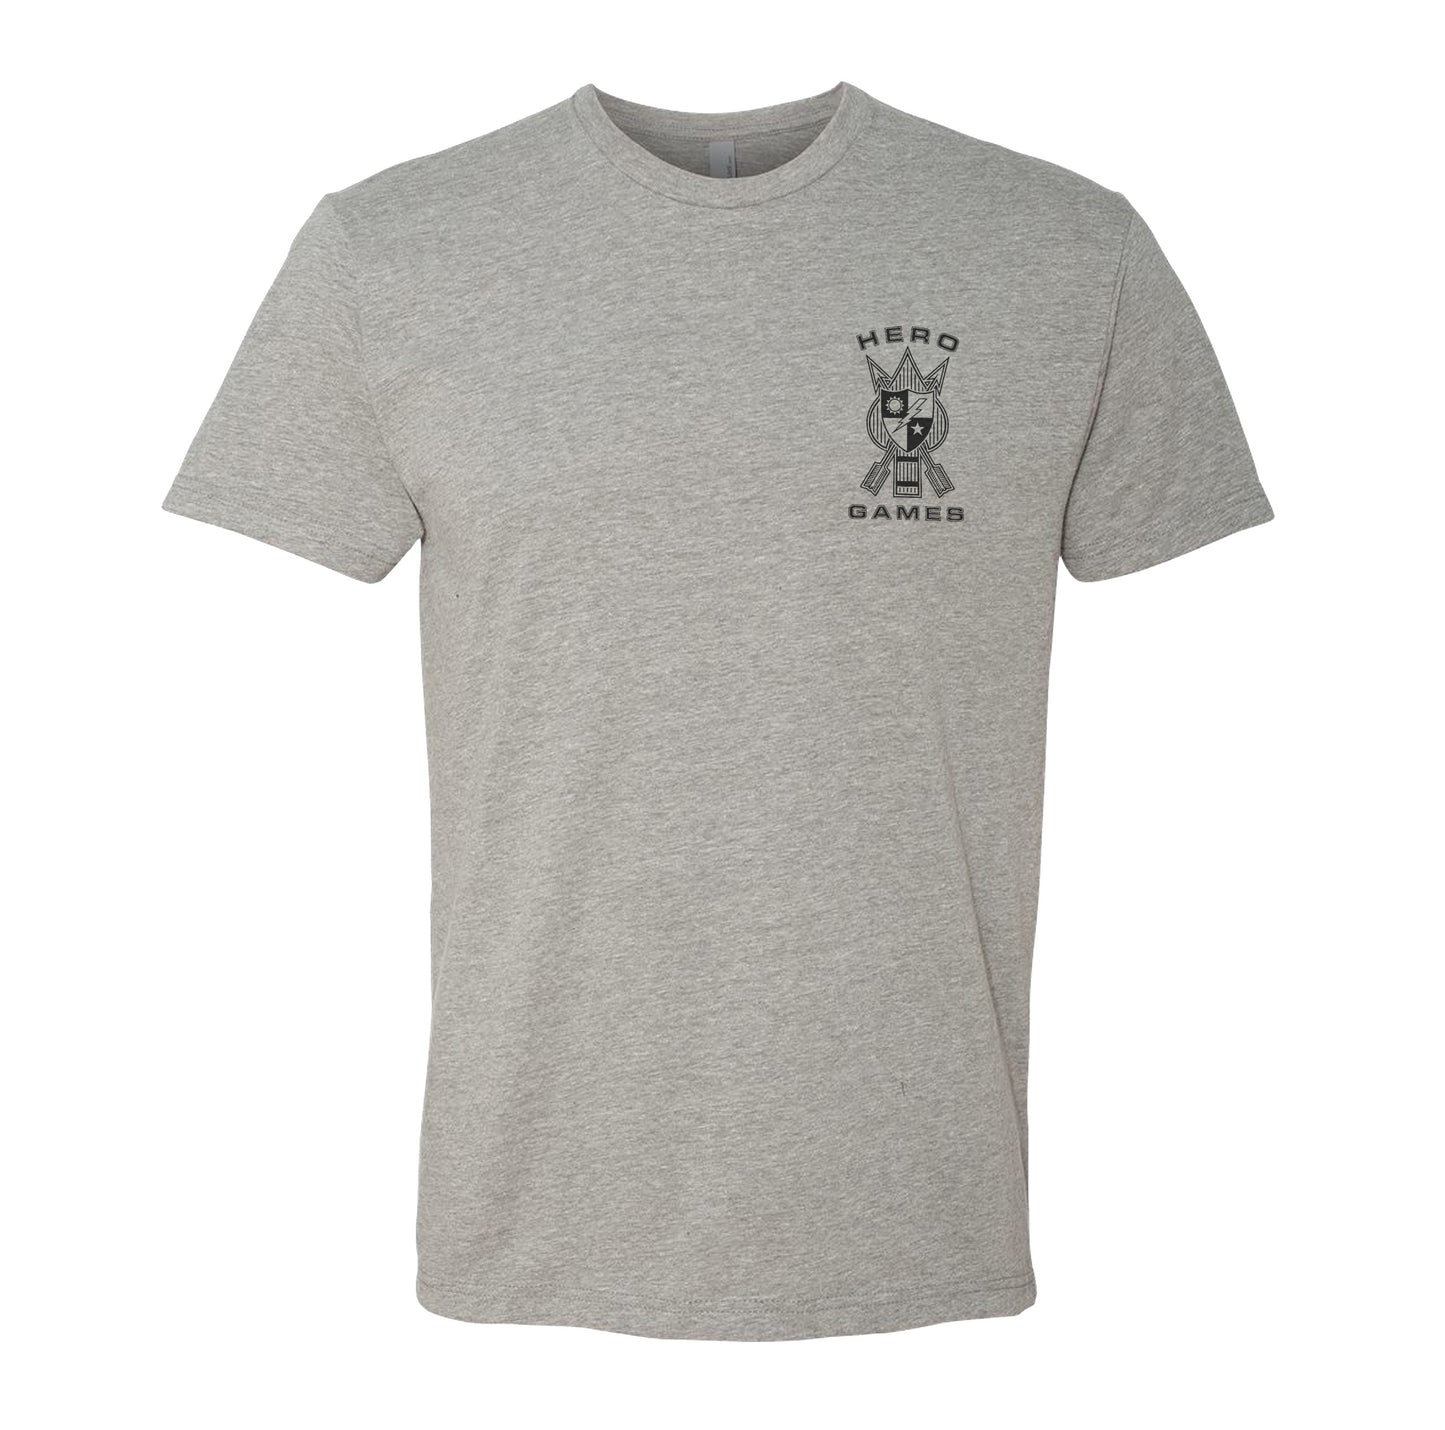 "Dahlke SSB Cross" Shirt